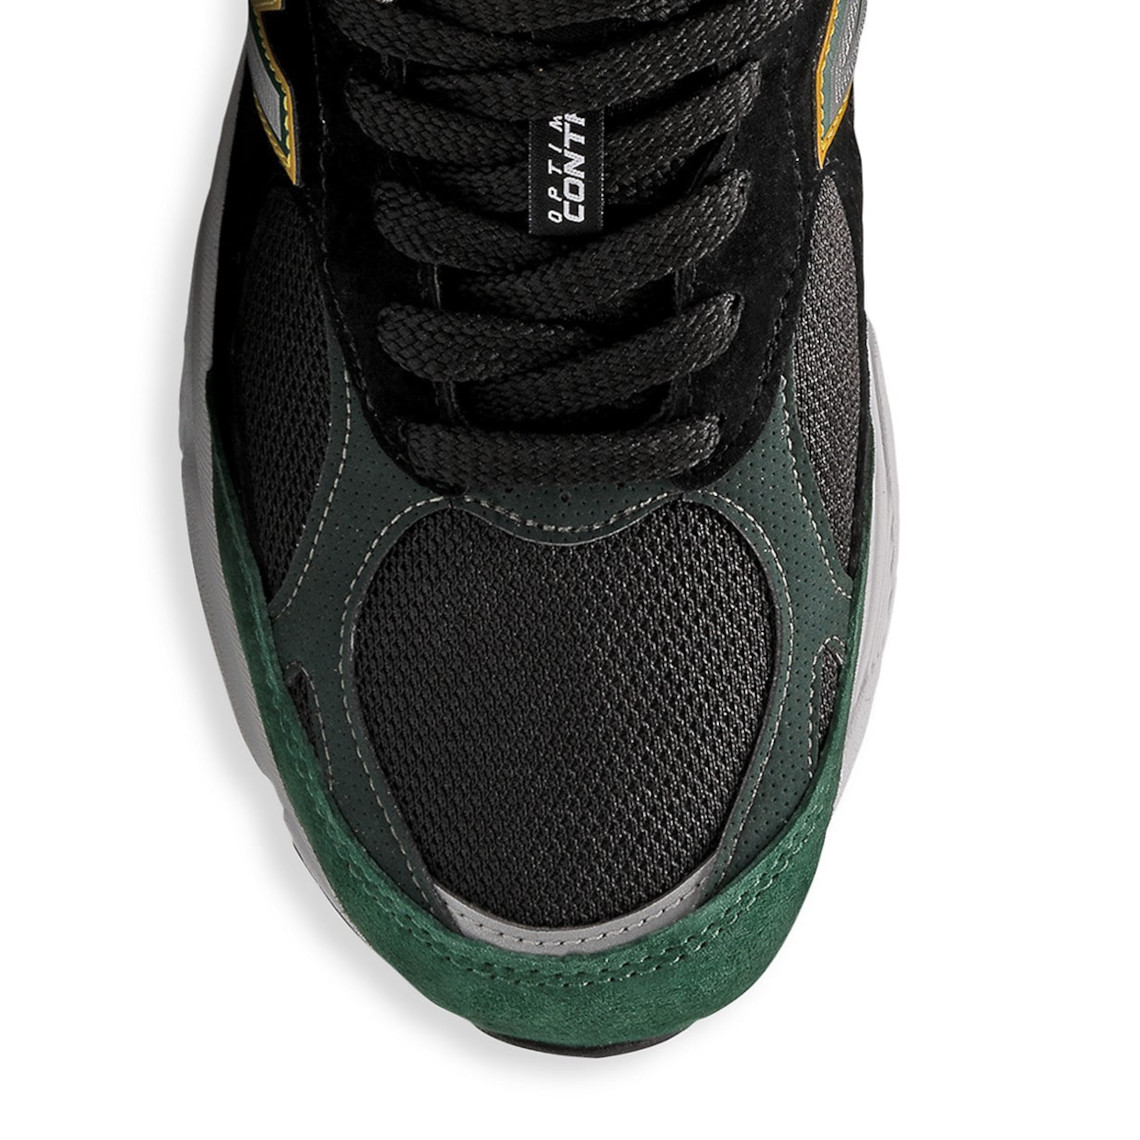 New Balance 990v3 Black Green Yellow Release Date | SneakerNews.com